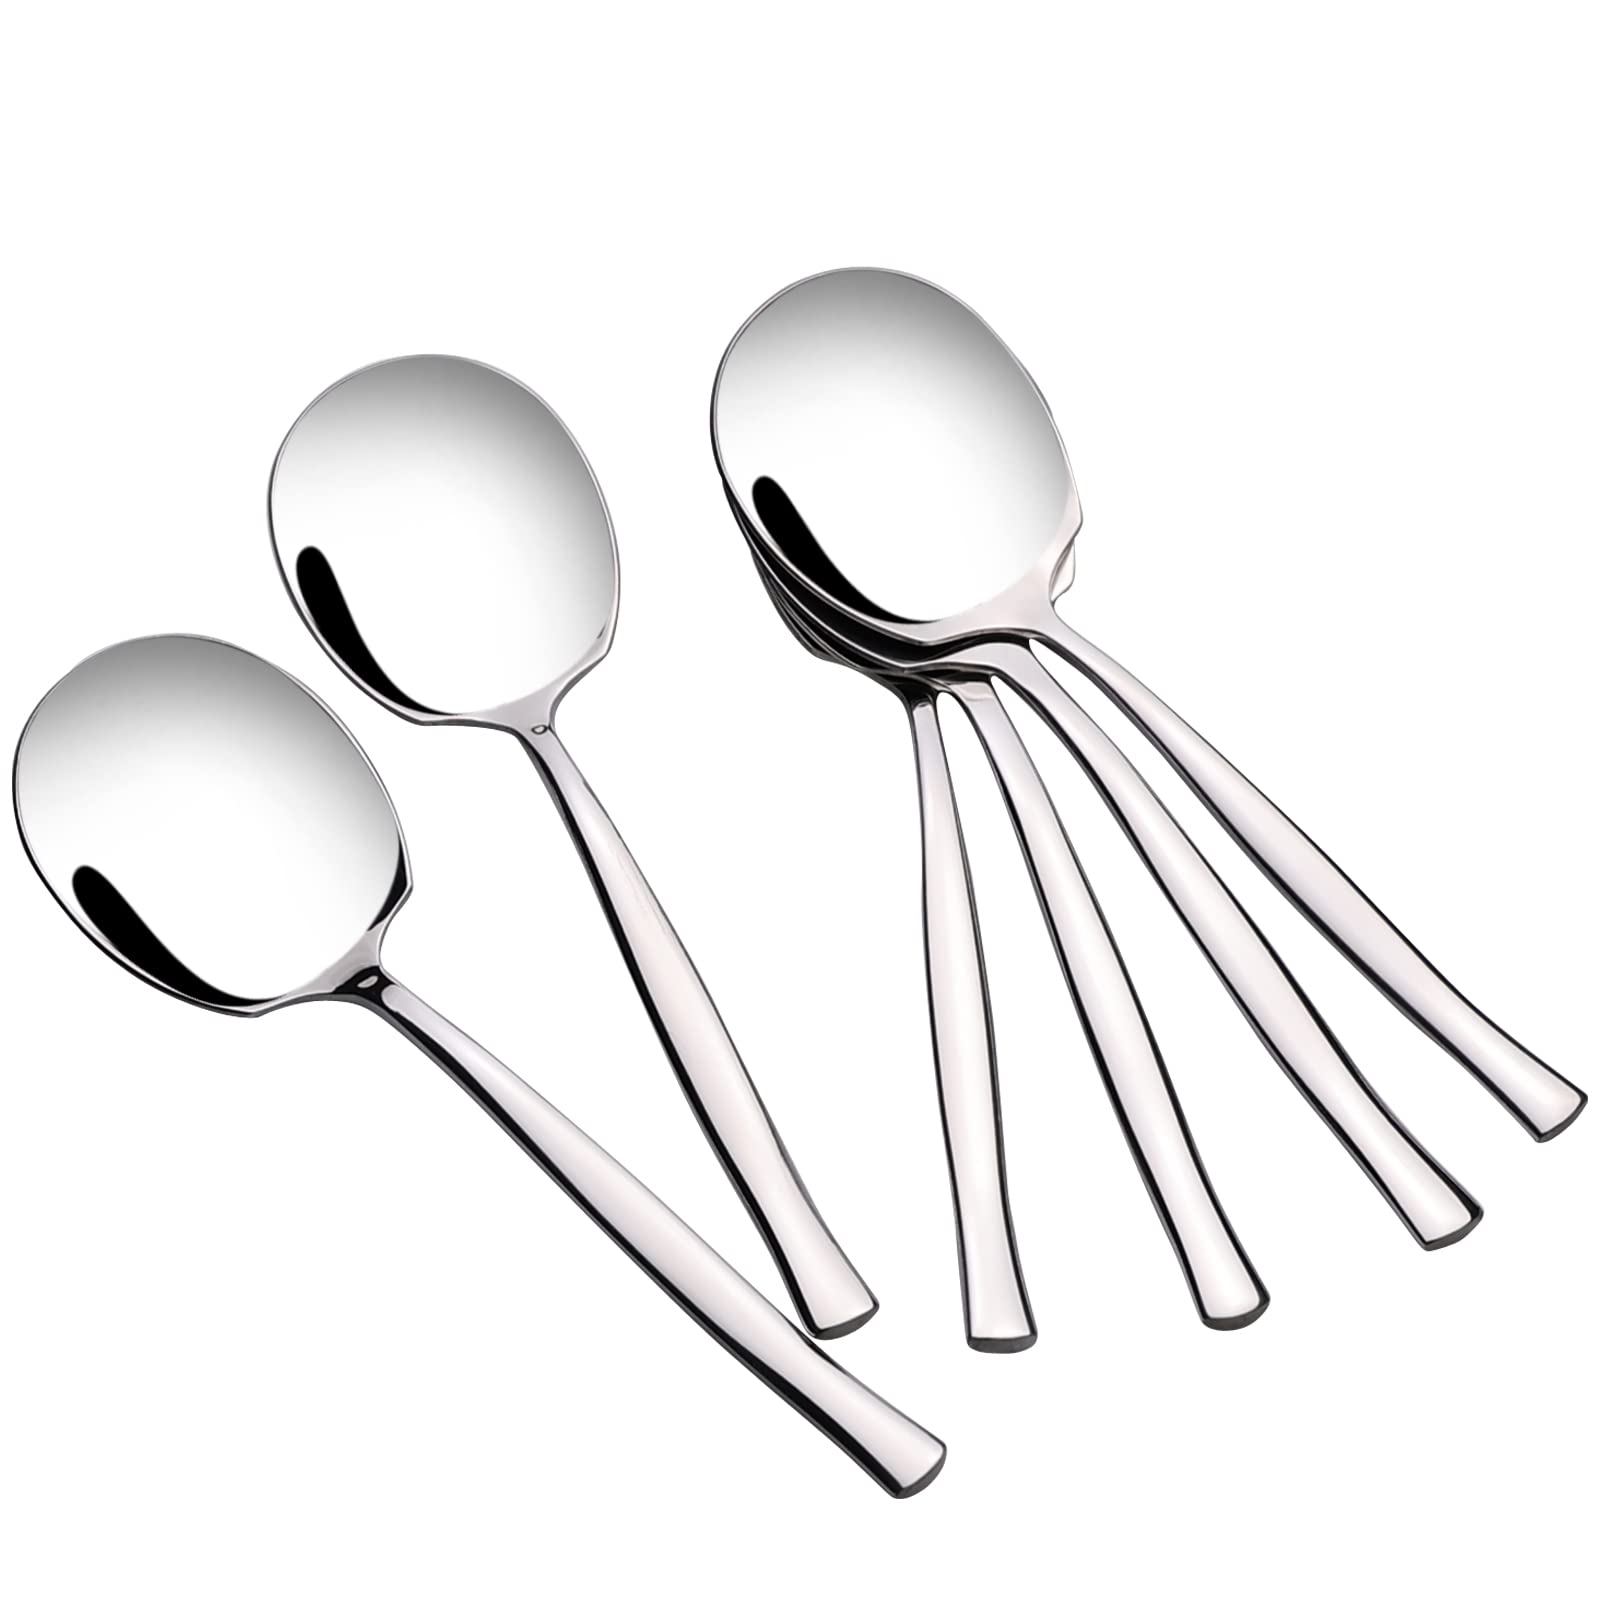 Joyeen Stainless Steel Buffet Serving Spoon, Large Serving Spoon Set of 6